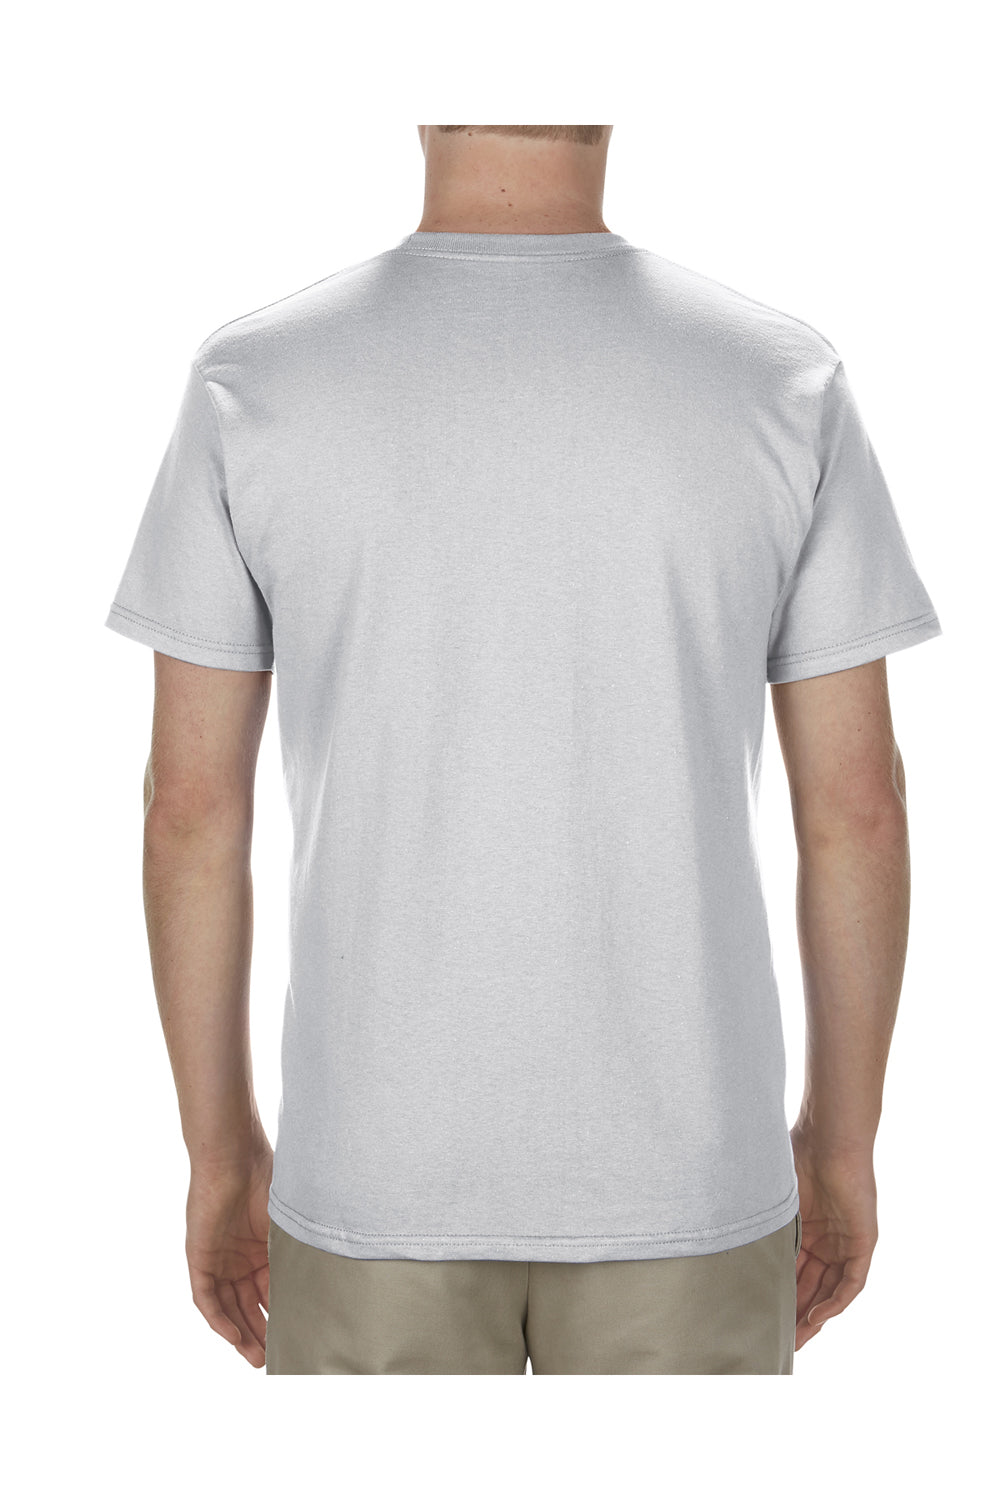 Alstyle AL1701 Mens Soft Spun Short Sleeve Crewneck T-Shirt Silver Grey Back